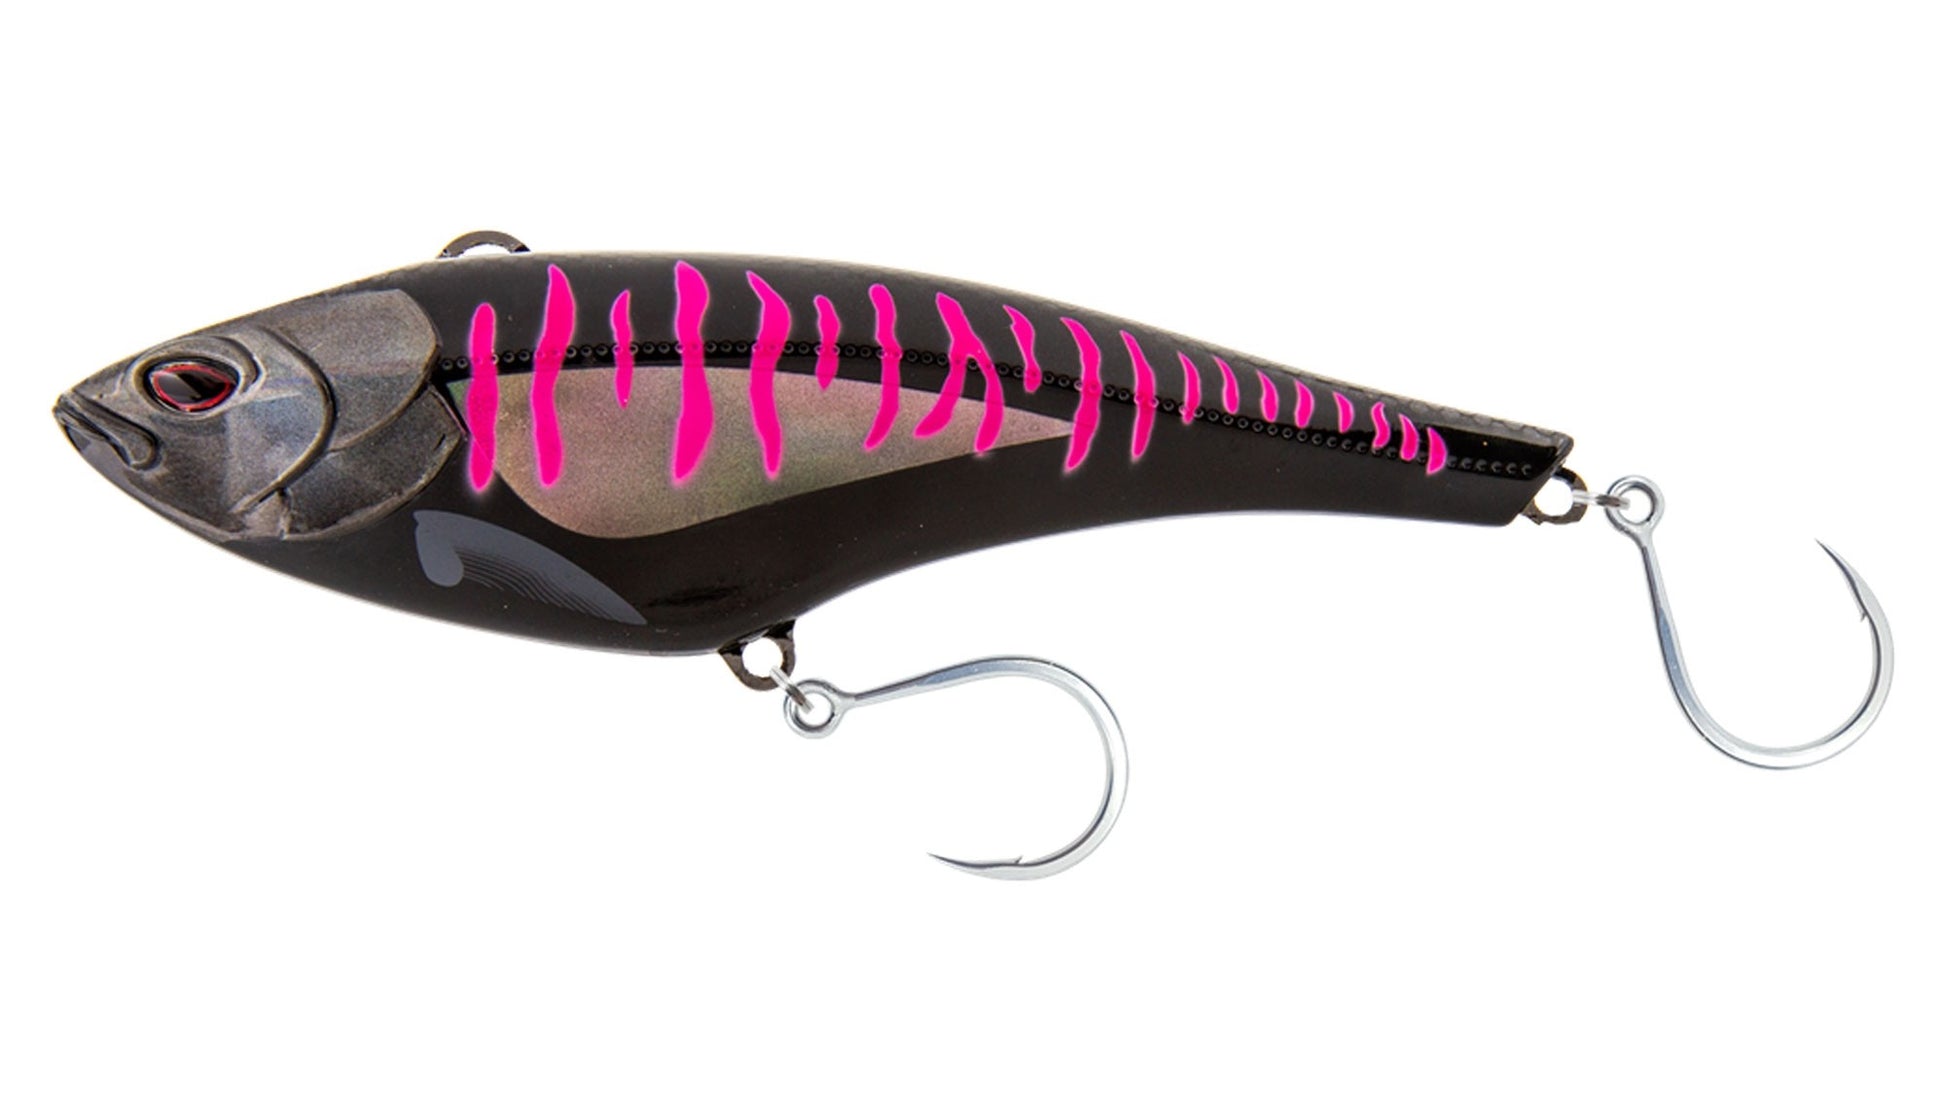 Nomad Design Madmacs Sinking High Speed Lure - Black Pink Mackerel 200, 8